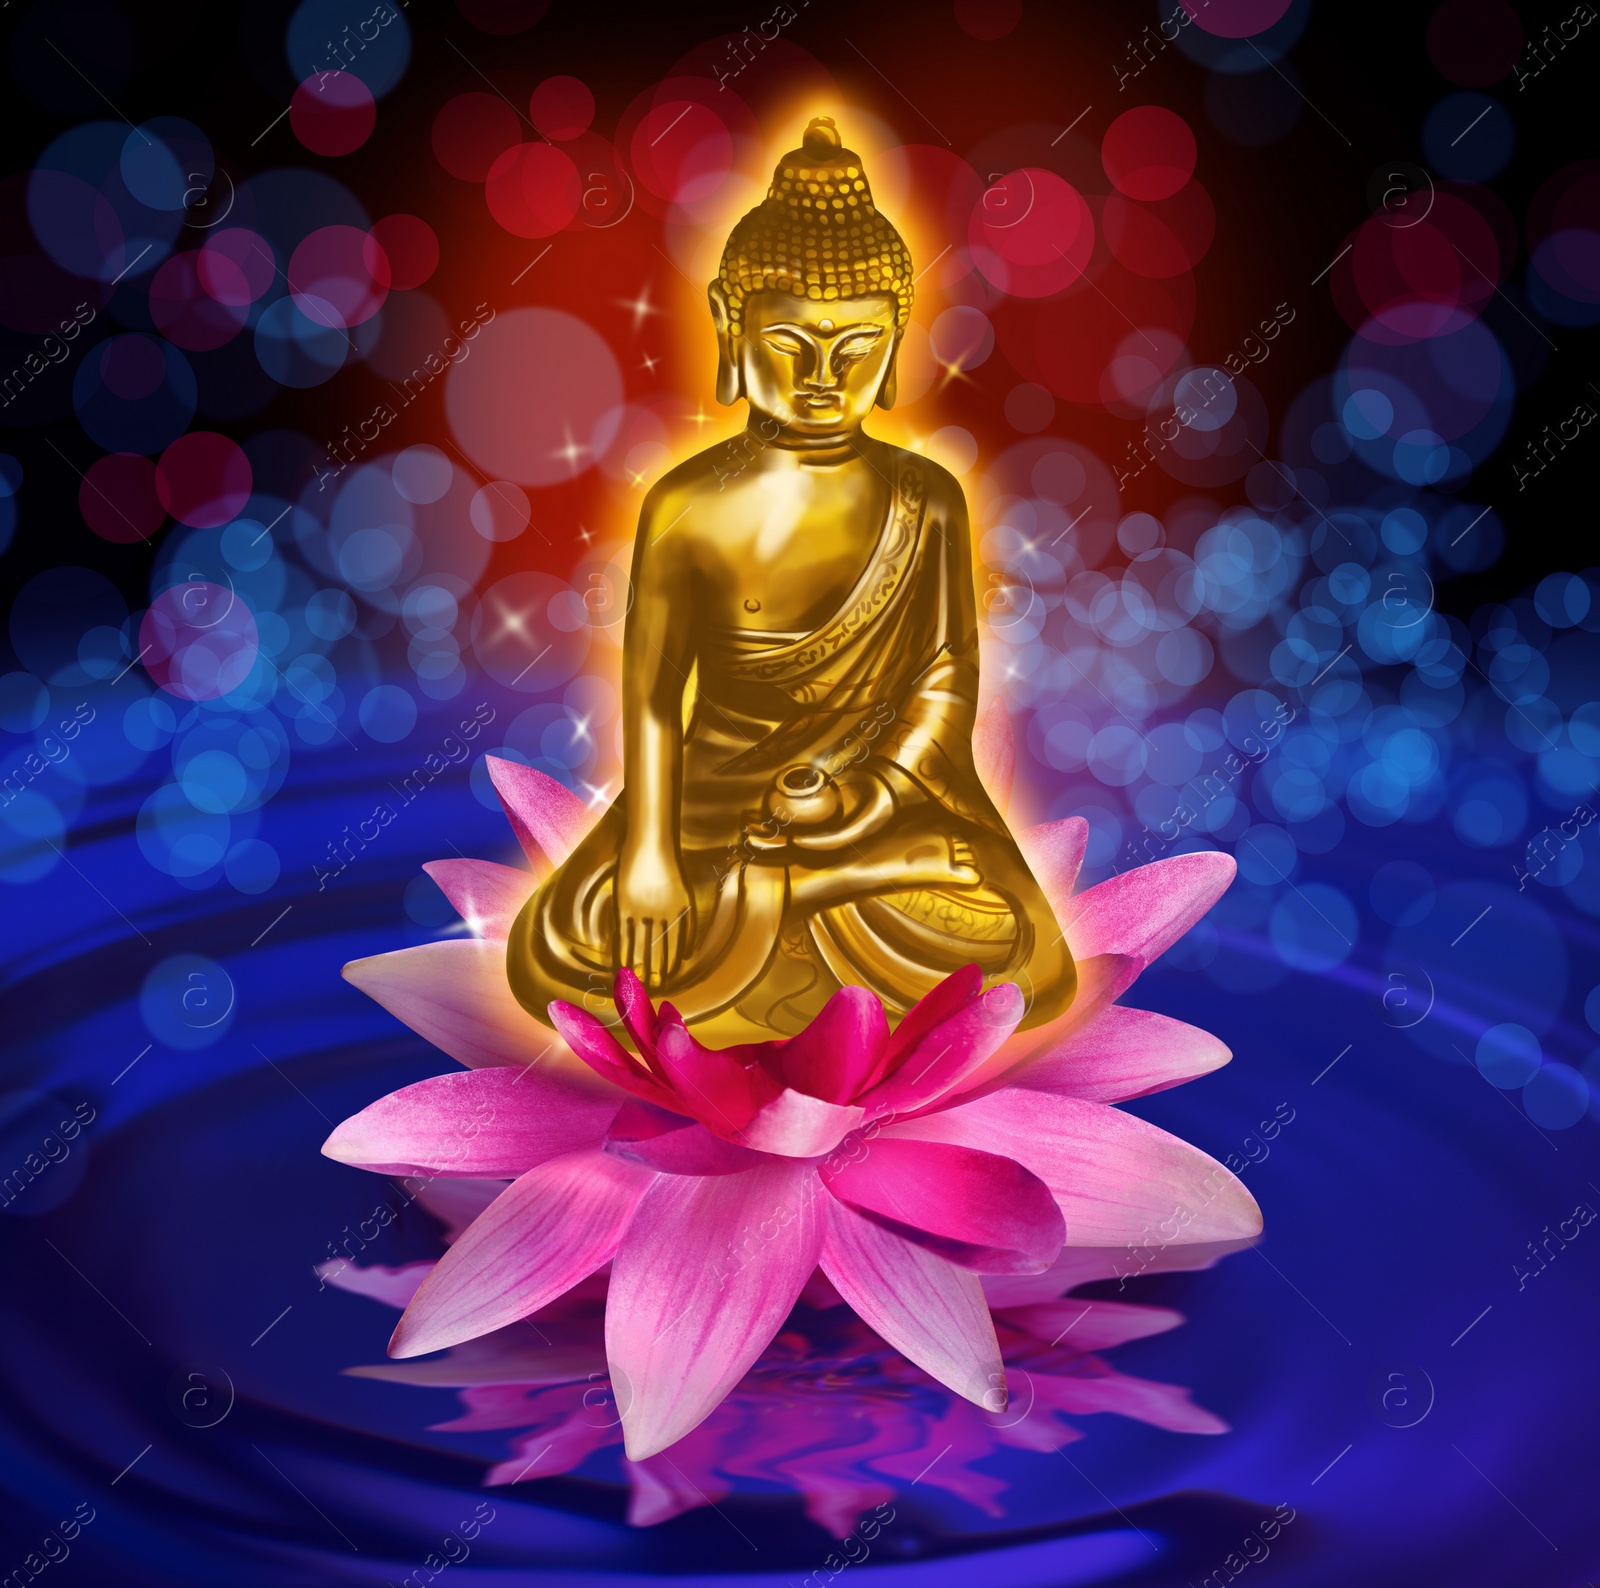 Image of Buddha figure in lotus flower on water, bokeh effect